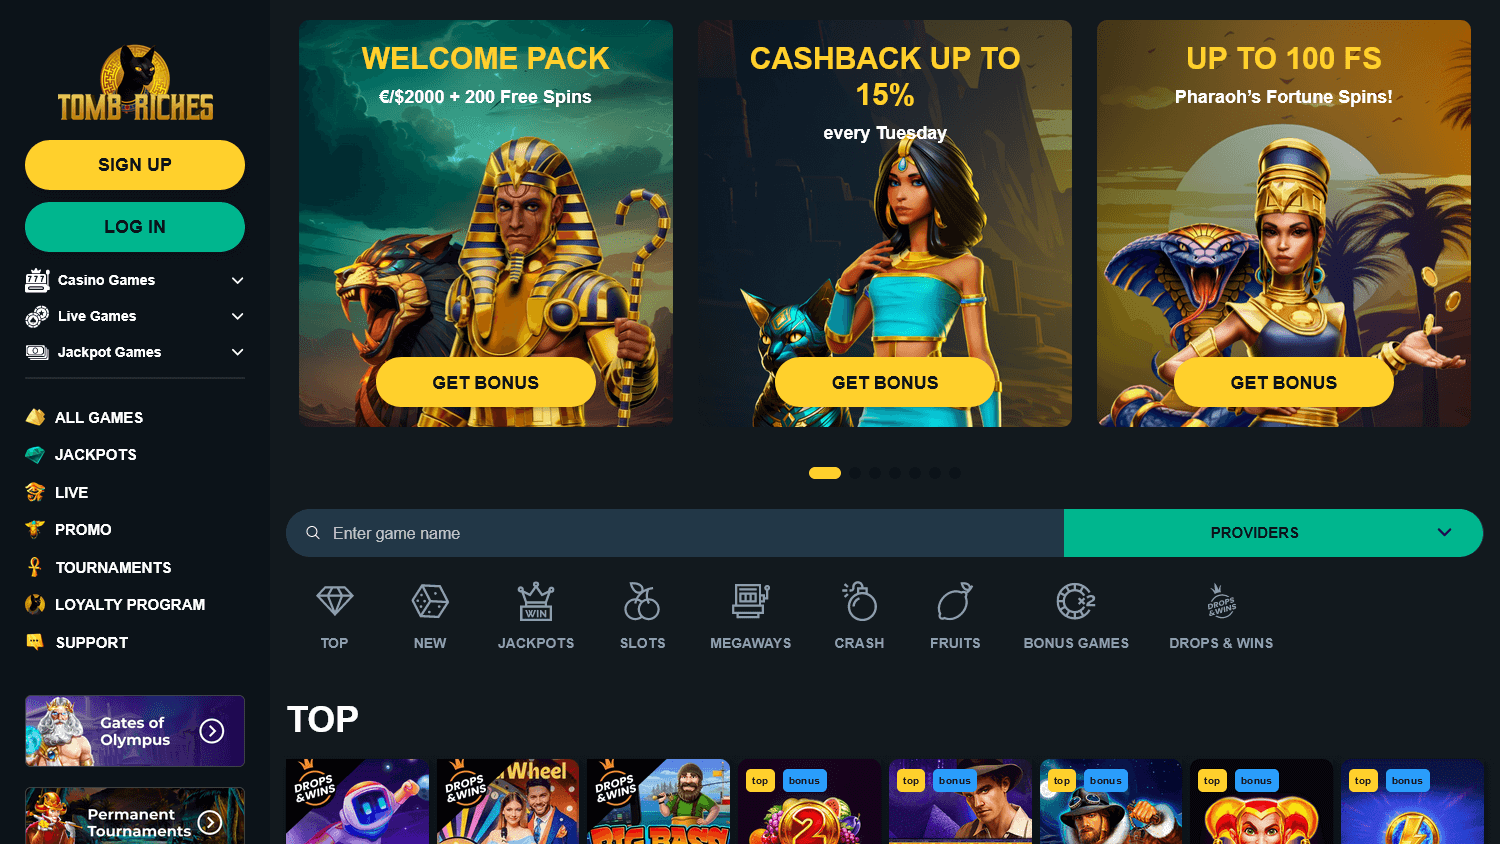 tombriches_casino_homepage_desktop